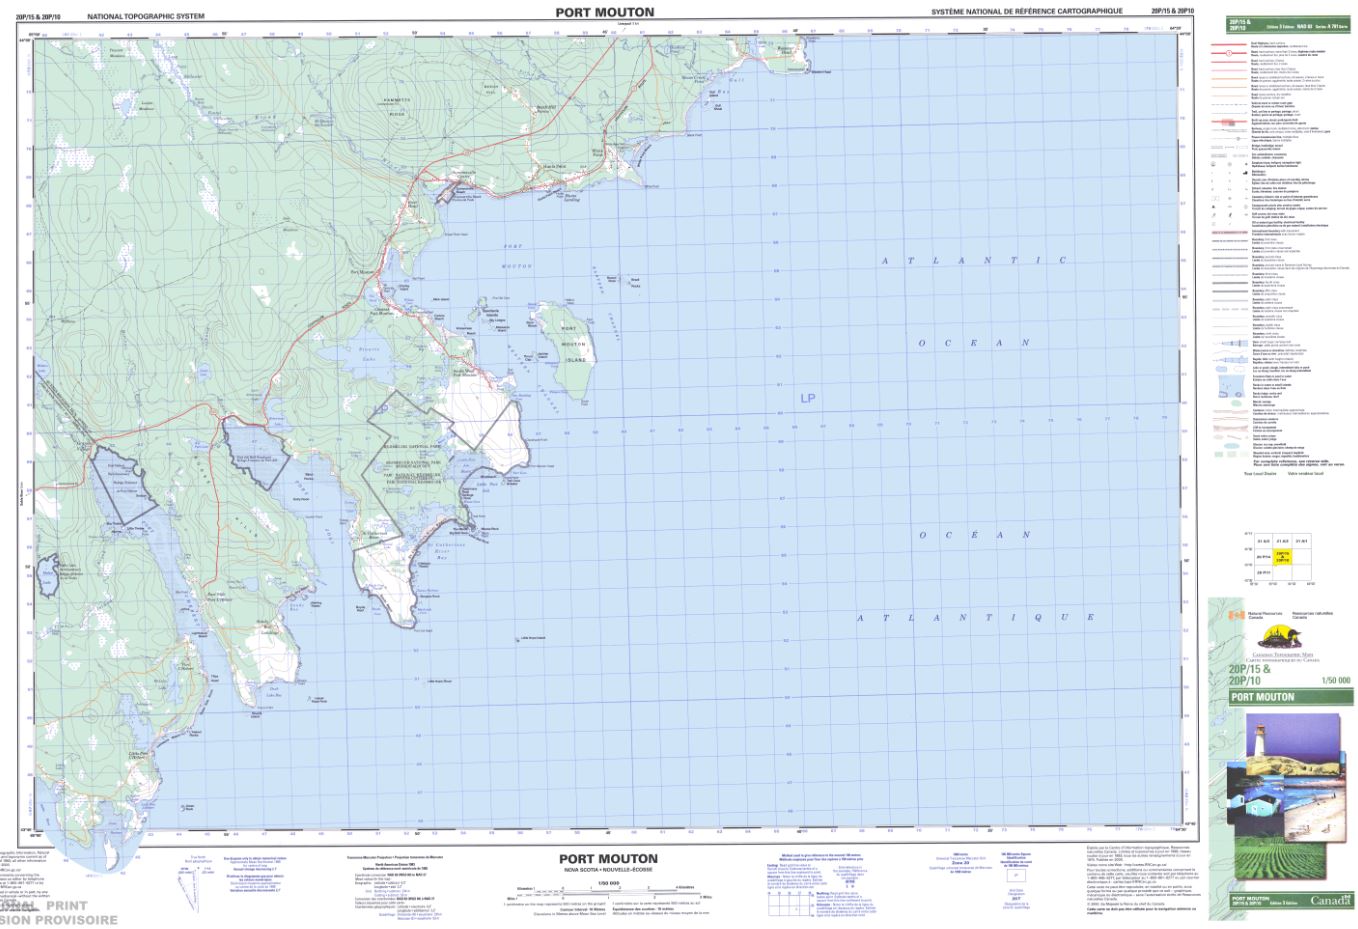 20P/15 Port Mouton Topographic Map Nova Scotia Tyvek